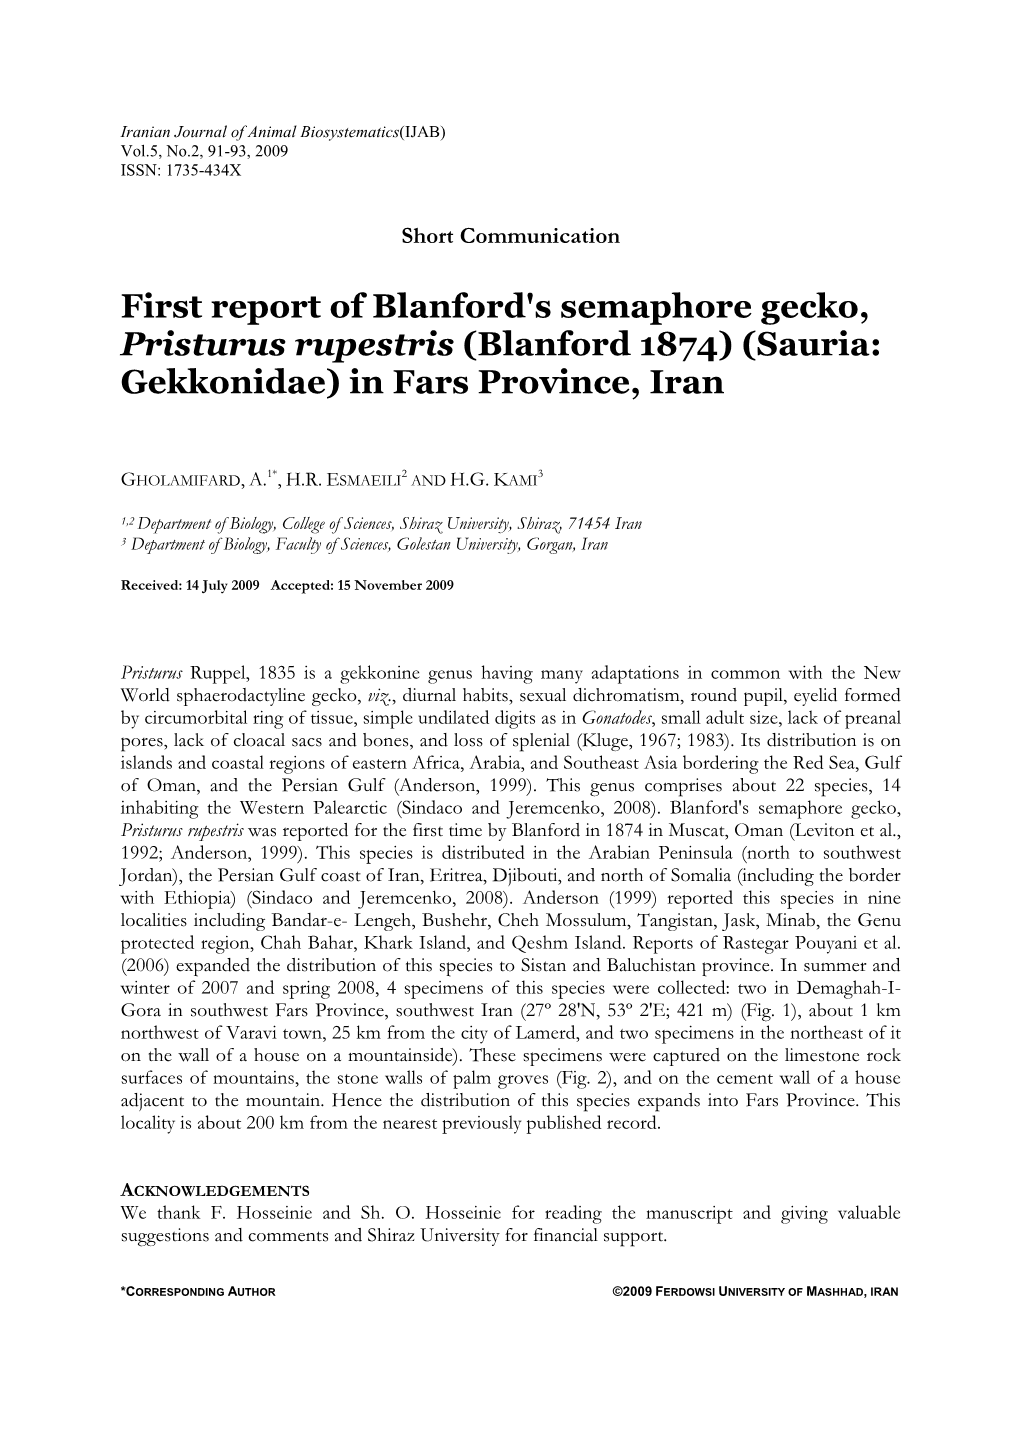 First Report of Blanford's Semaphore Gecko, Pristurus Rupestris (Blanford 1874) (Sauria: Gekkonidae) in Fars Province, Iran